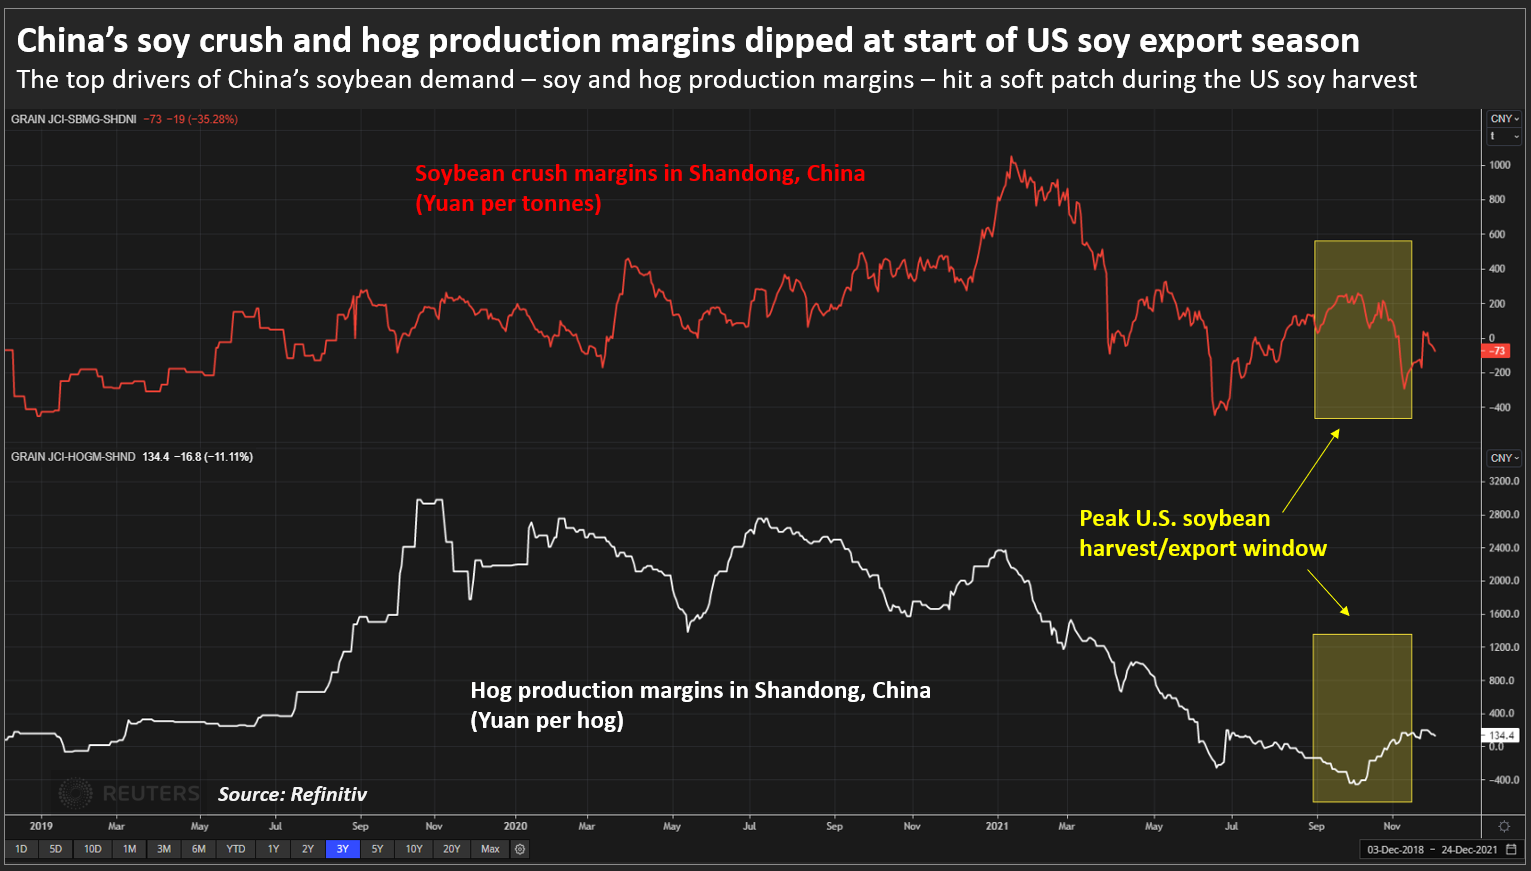 China’s soy crush and hog production margins dipped at start of US soy export season